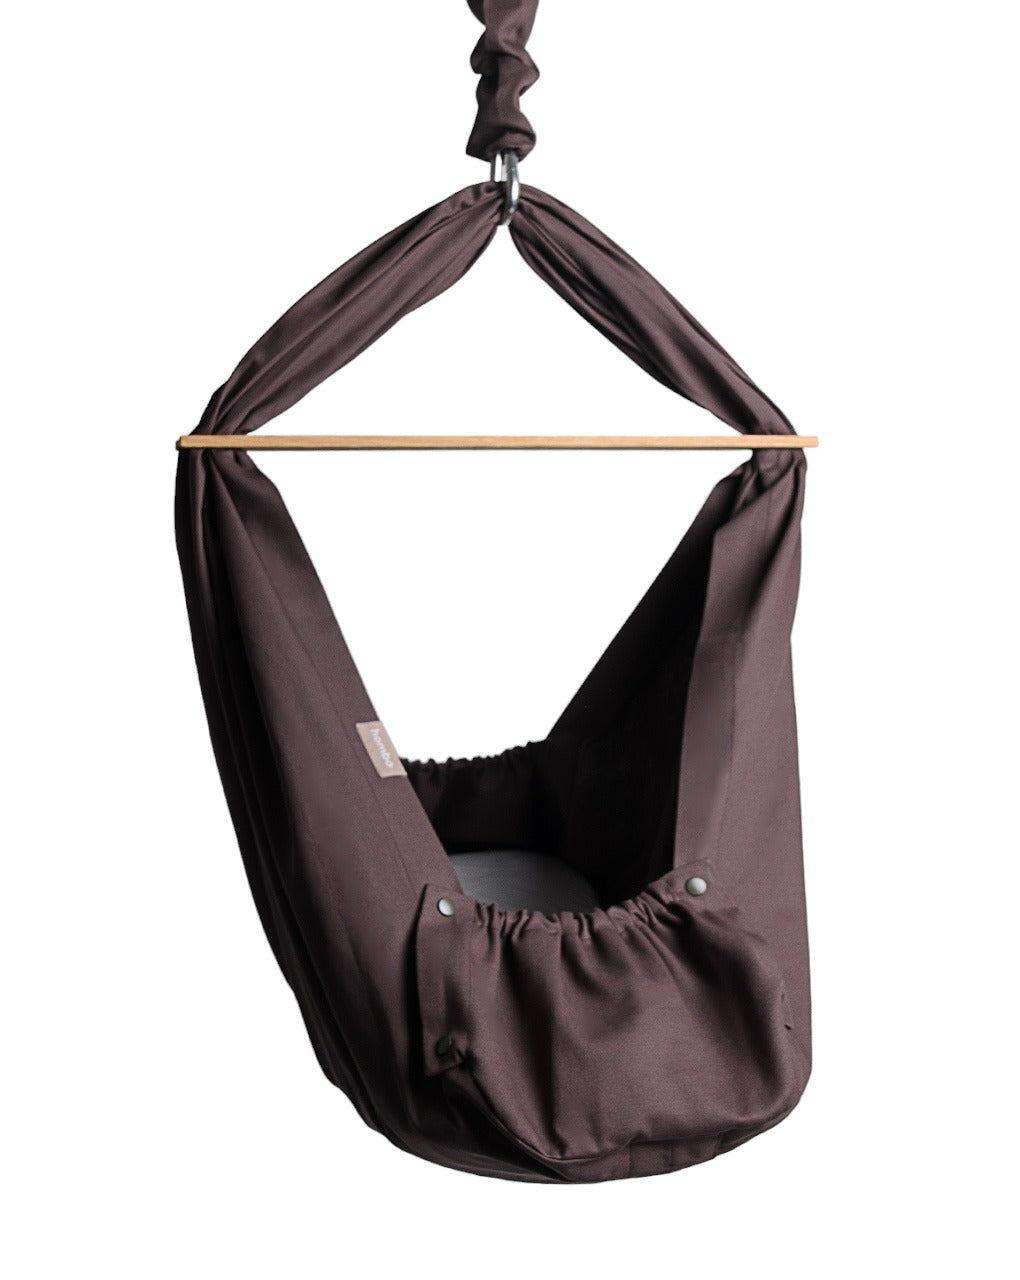 homba® baby hanging cradle cotton brown